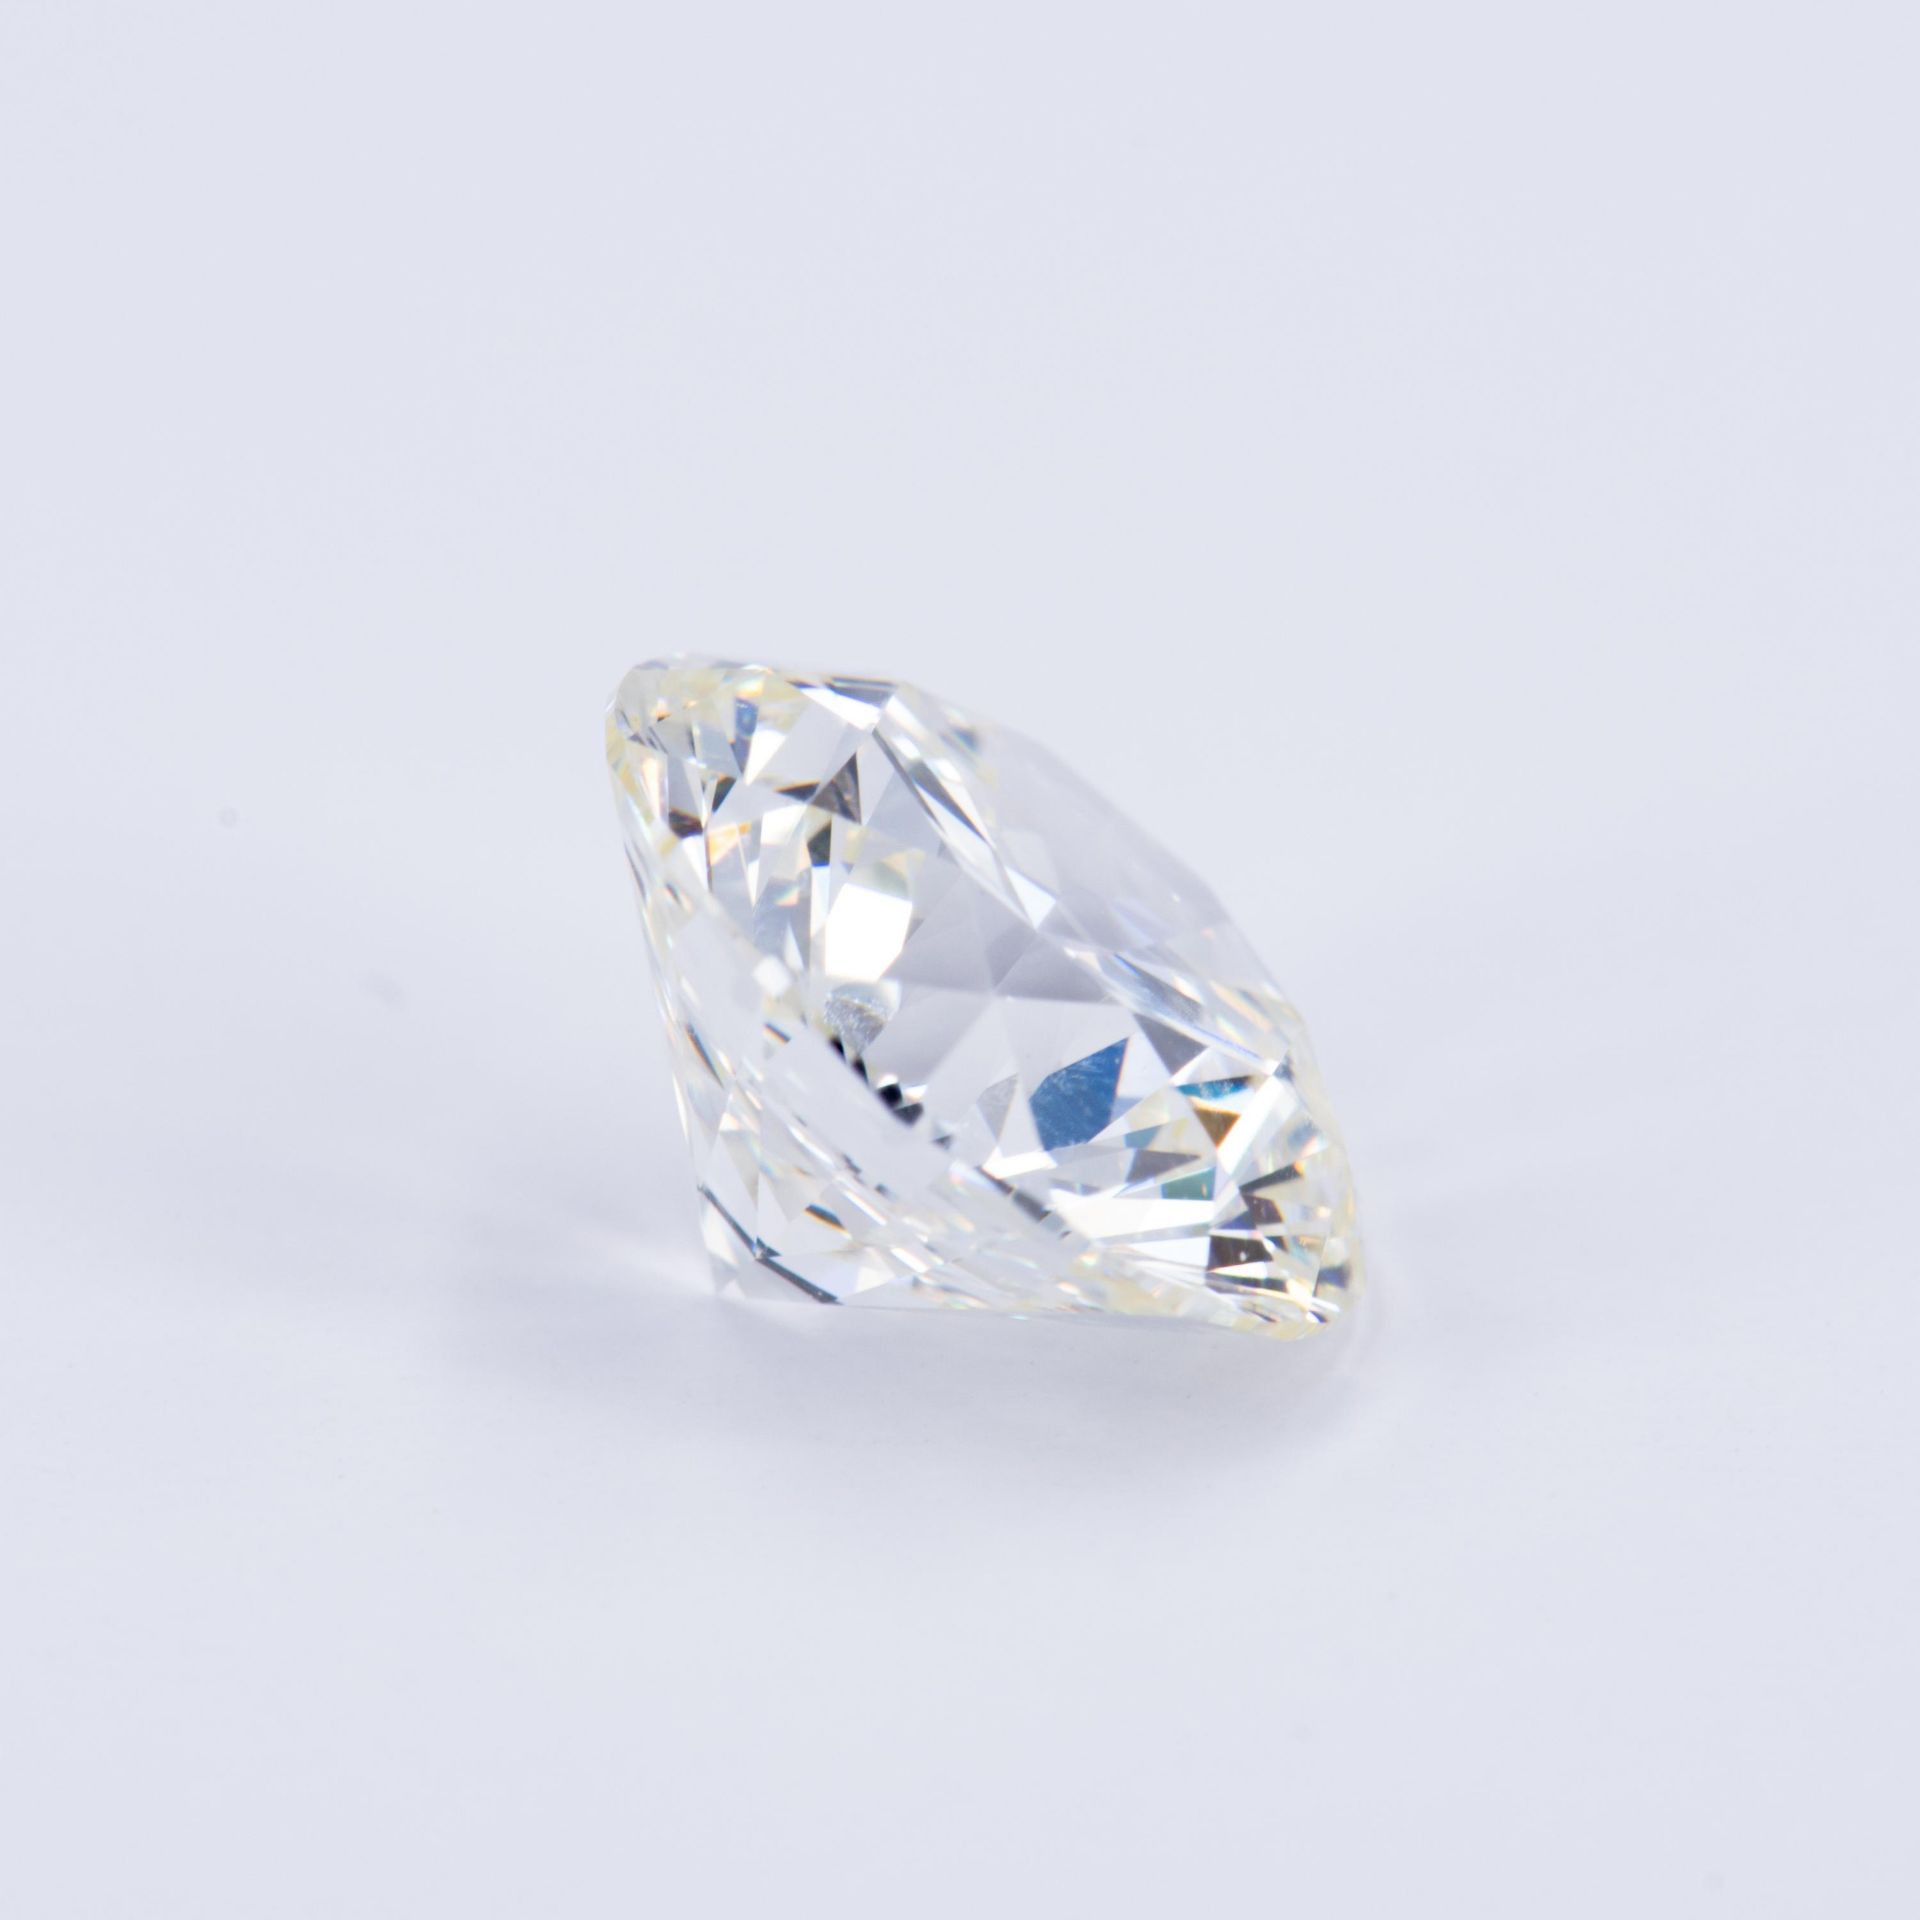 UNMOUNTED BRILLIANT-CUT DIAMOND - Image 4 of 6